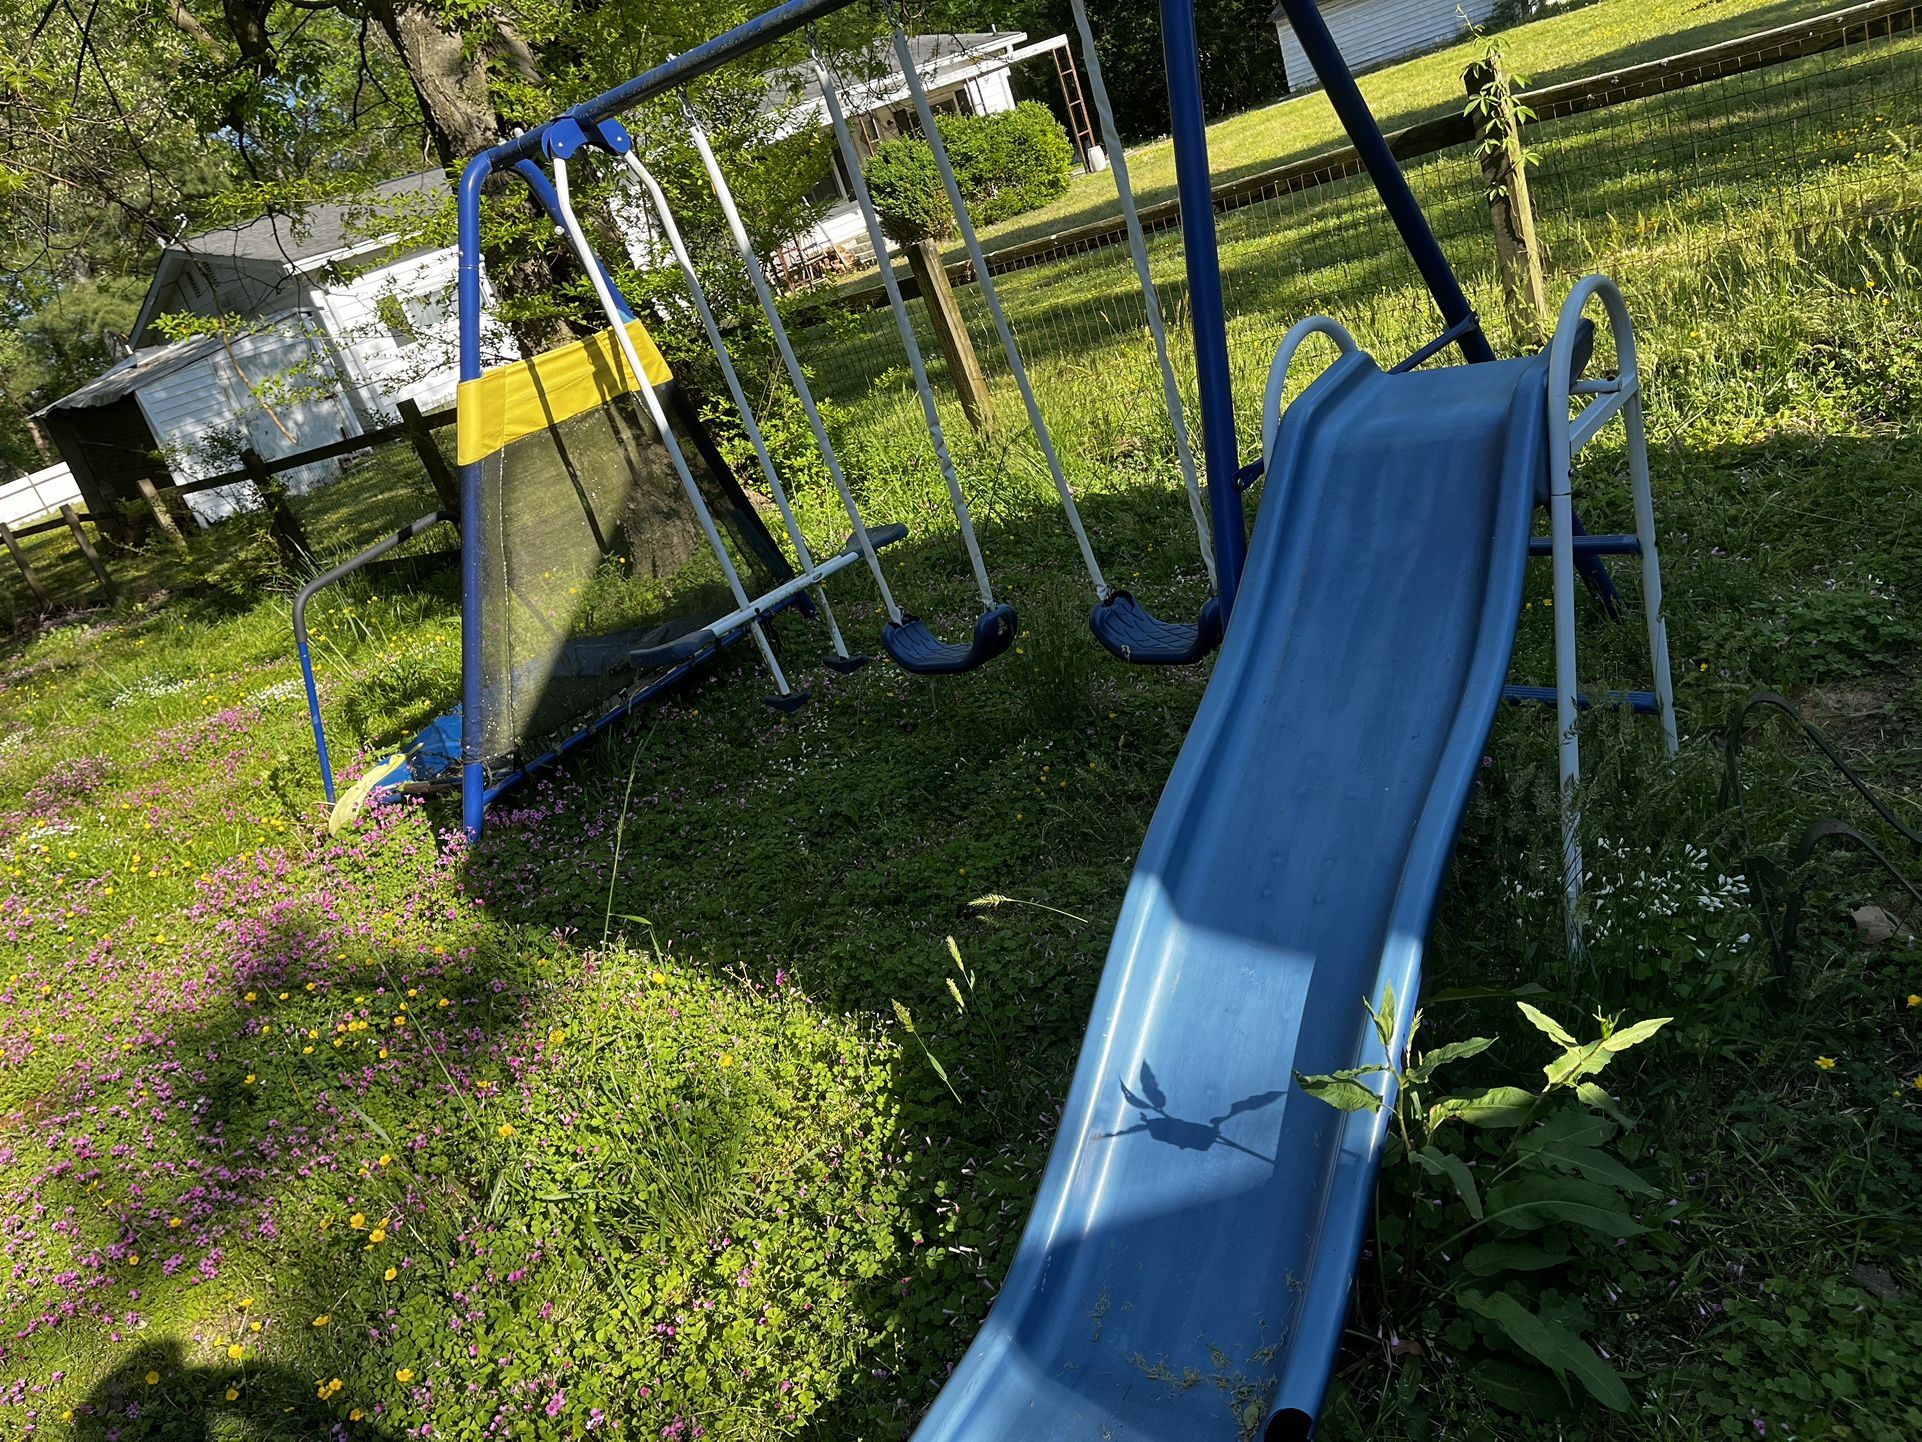 Swing Set With Slide 